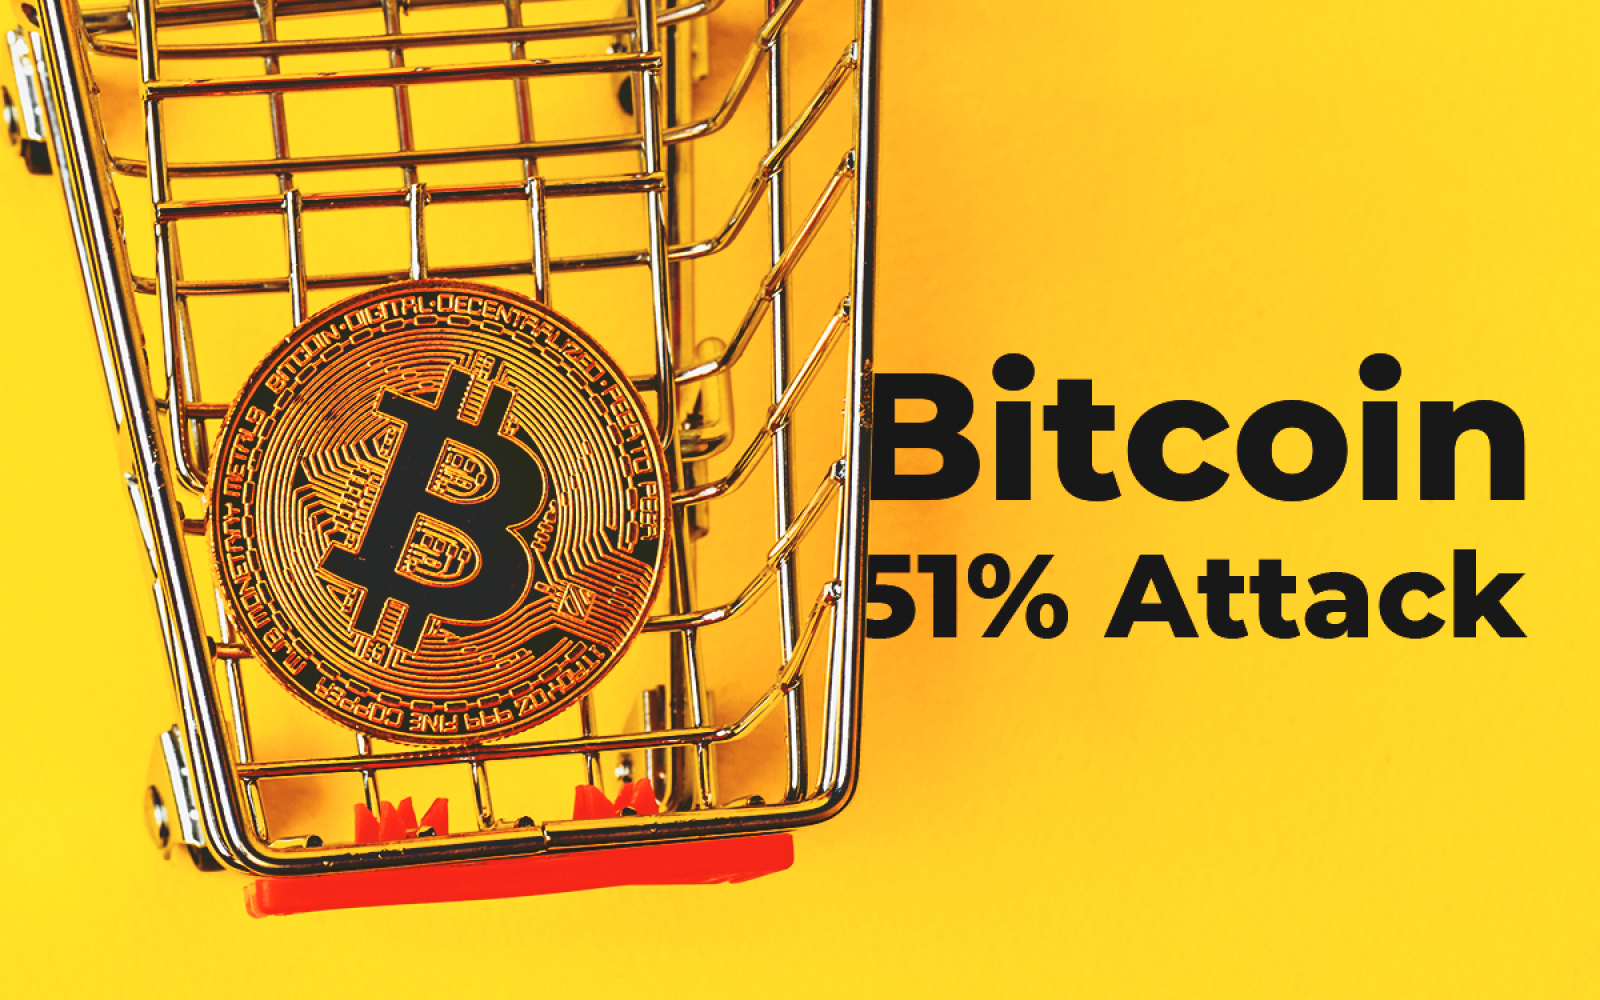 51 attack on bitcoin